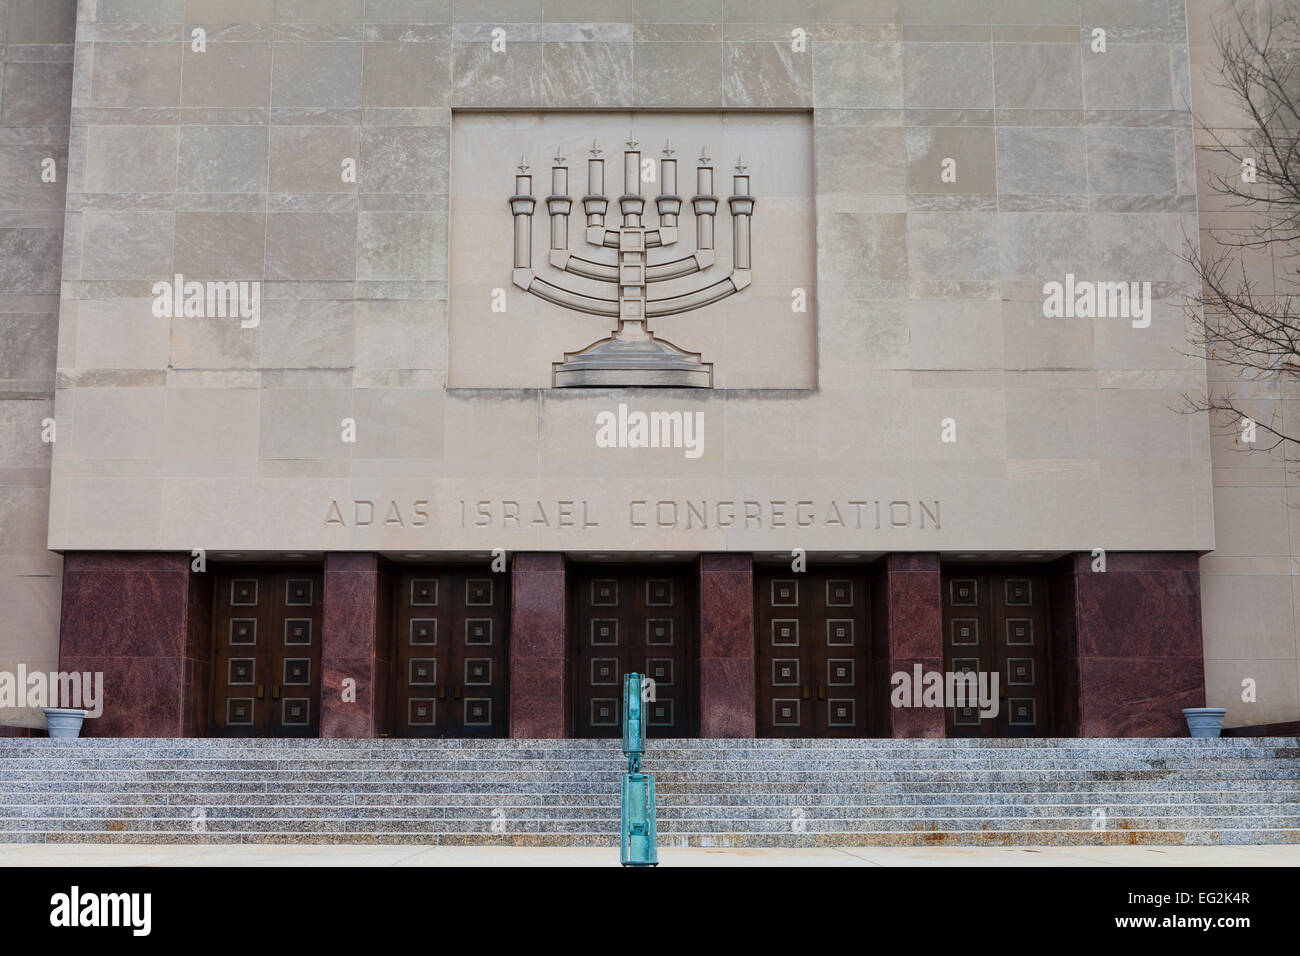 Adas Israel Gemeinde Synagoge - Washington, DC USA Stockfotografie - Alamy